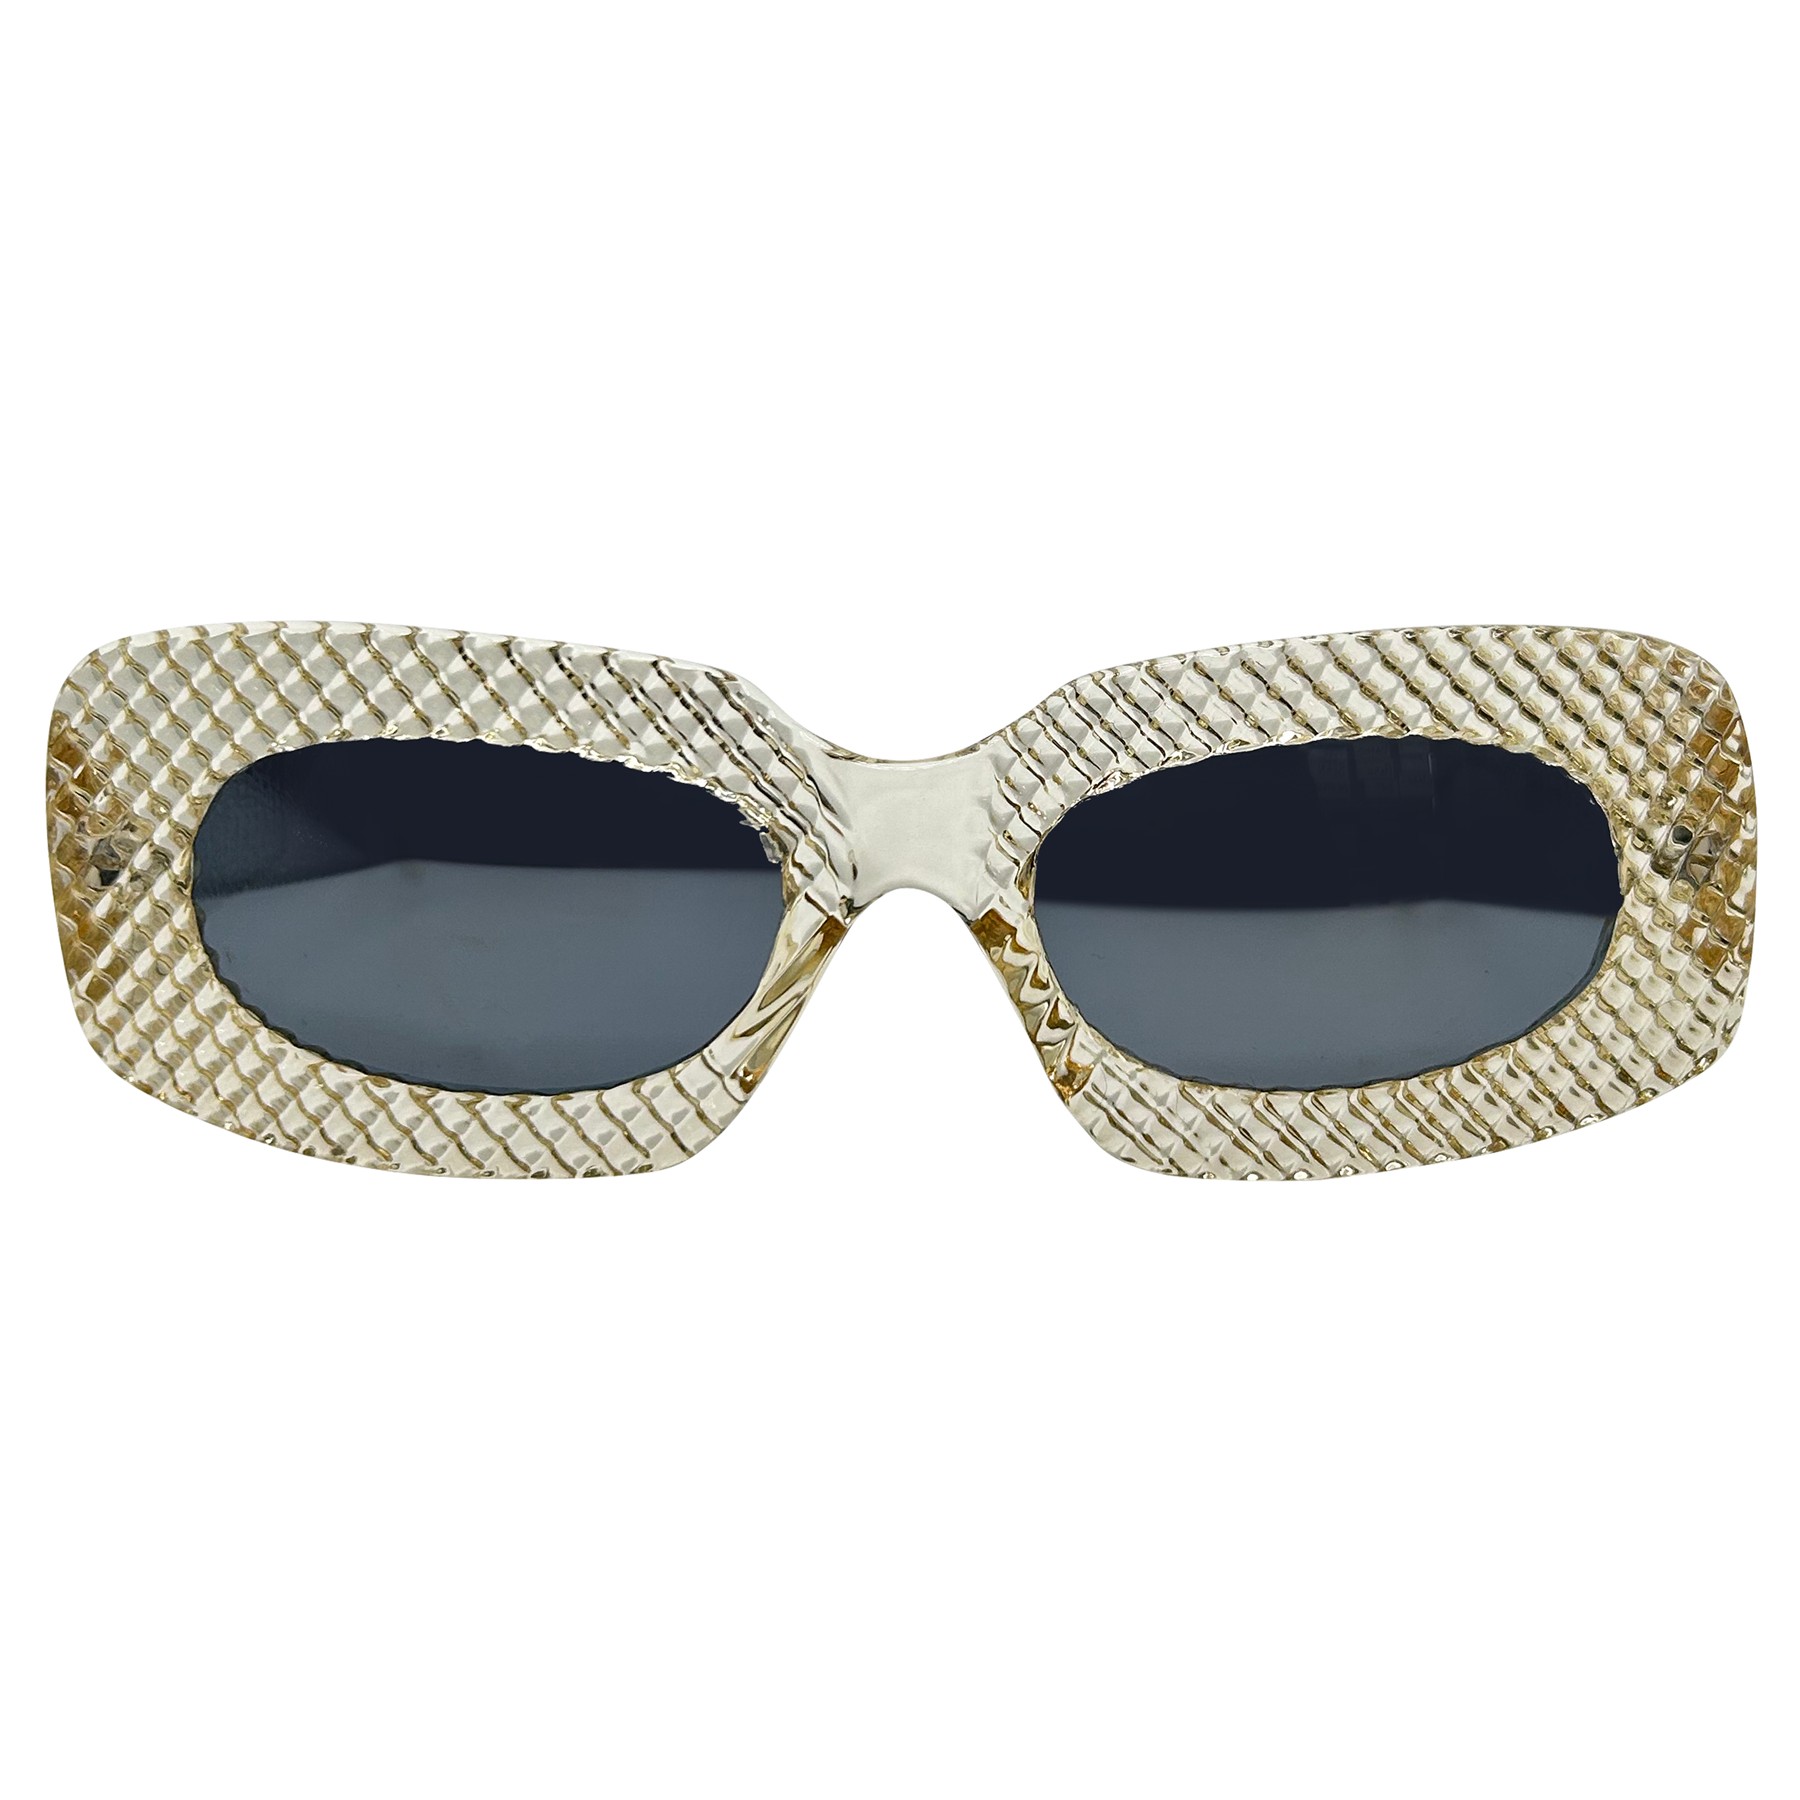 Buy ELEGANTE Rectanglular Sunglasses for Women Retro Driving Sunlgasses  Vintage Fashion Narrow Square Frame UV400 Protection (C1 - BLACK) at  Amazon.in